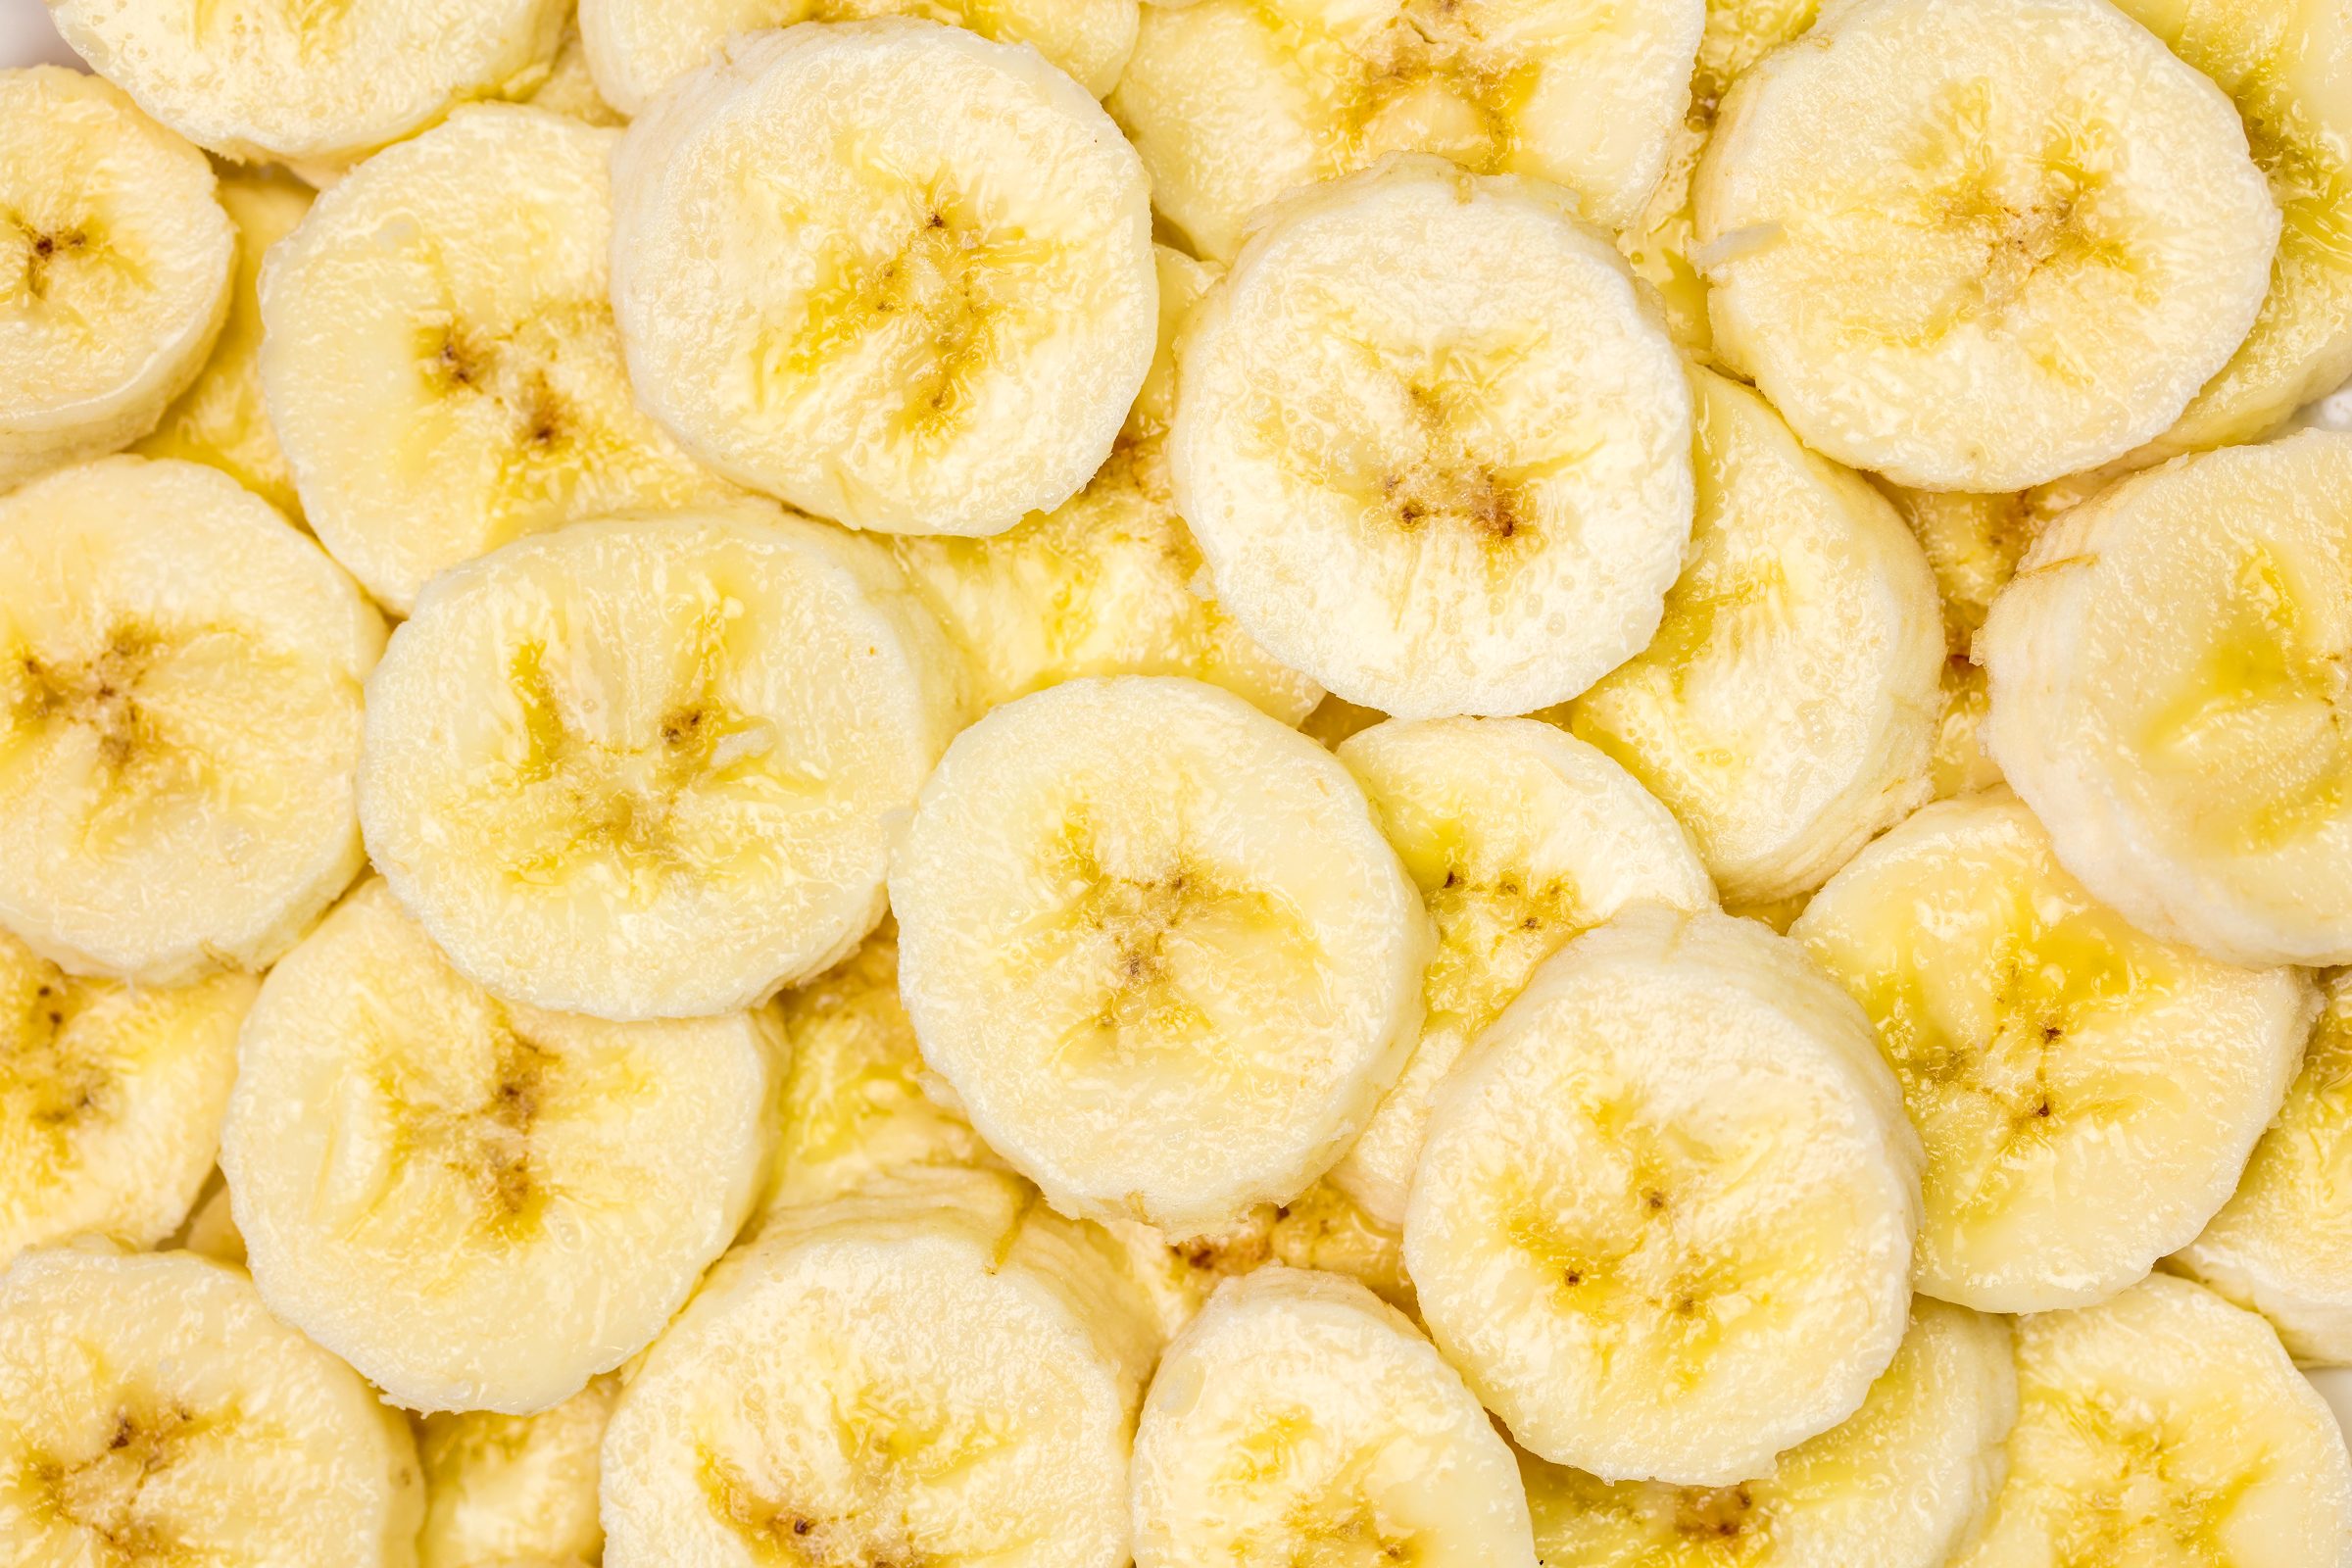 Top 5 health benefits of bananas